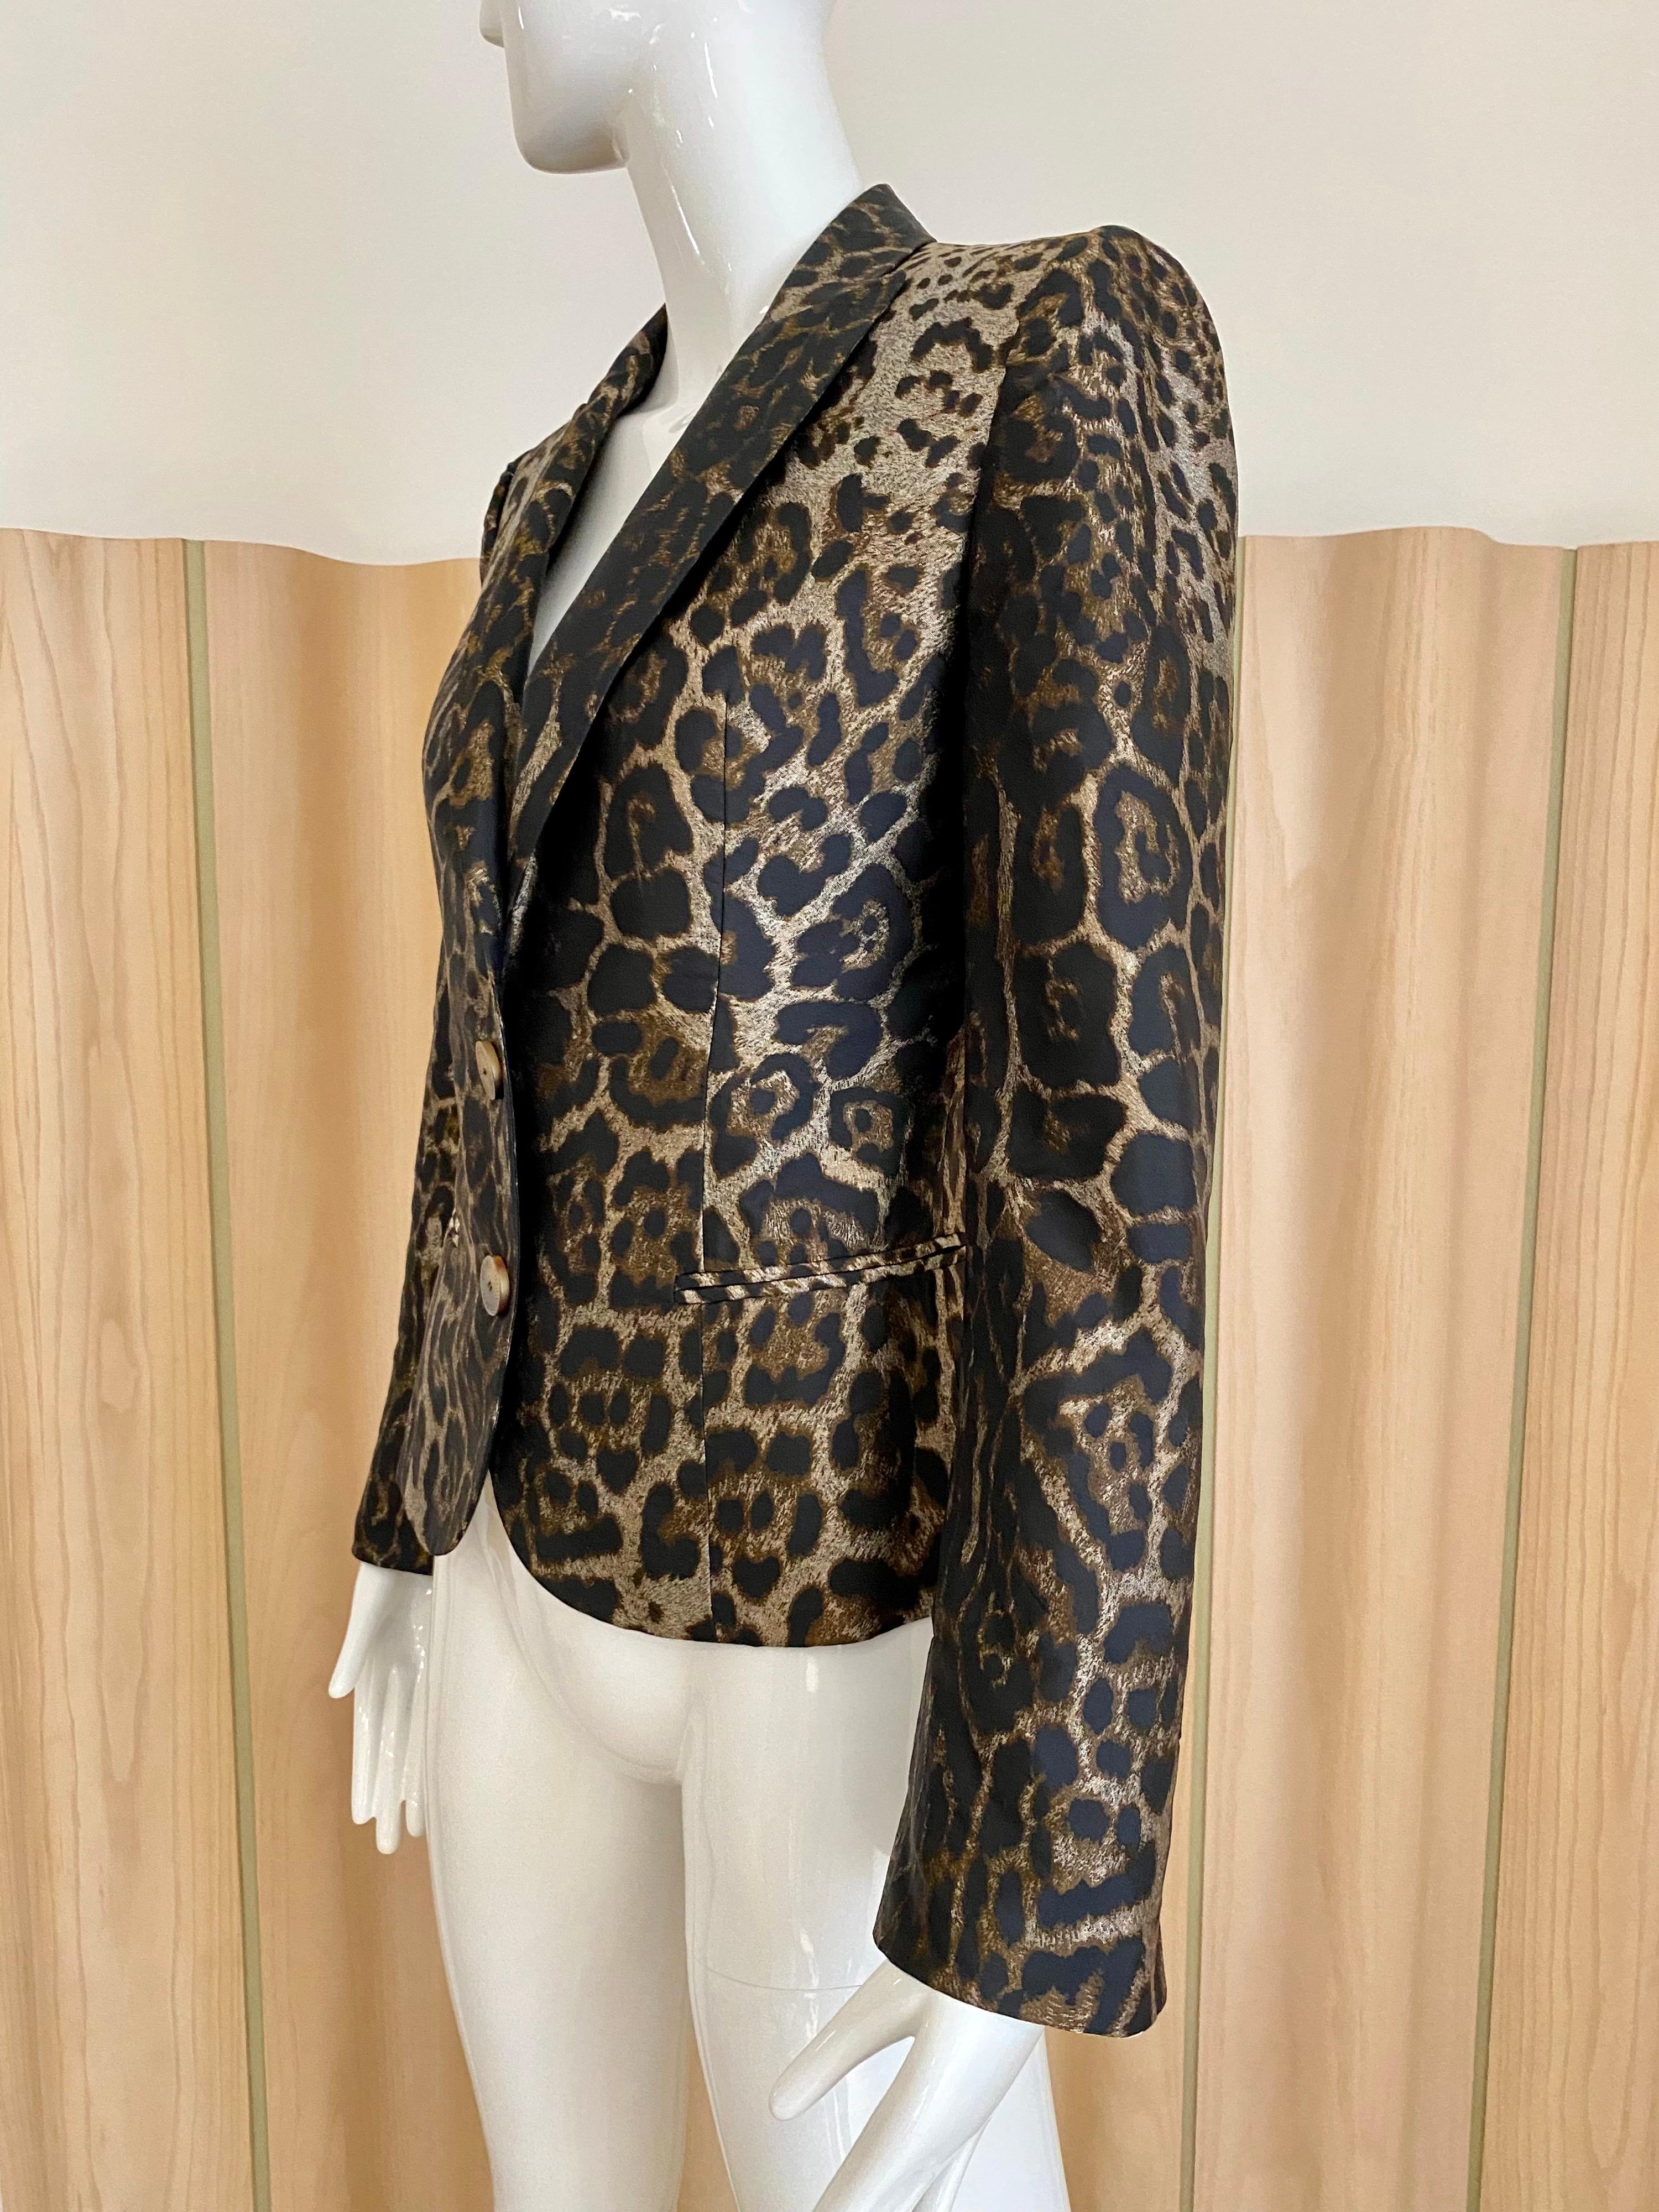 Gianfranco Ferre Leopard Print Seide Blazer Jacke .
Markierte Größe 38/ Passform Größe 2/4/ Klein
Schultern: 15